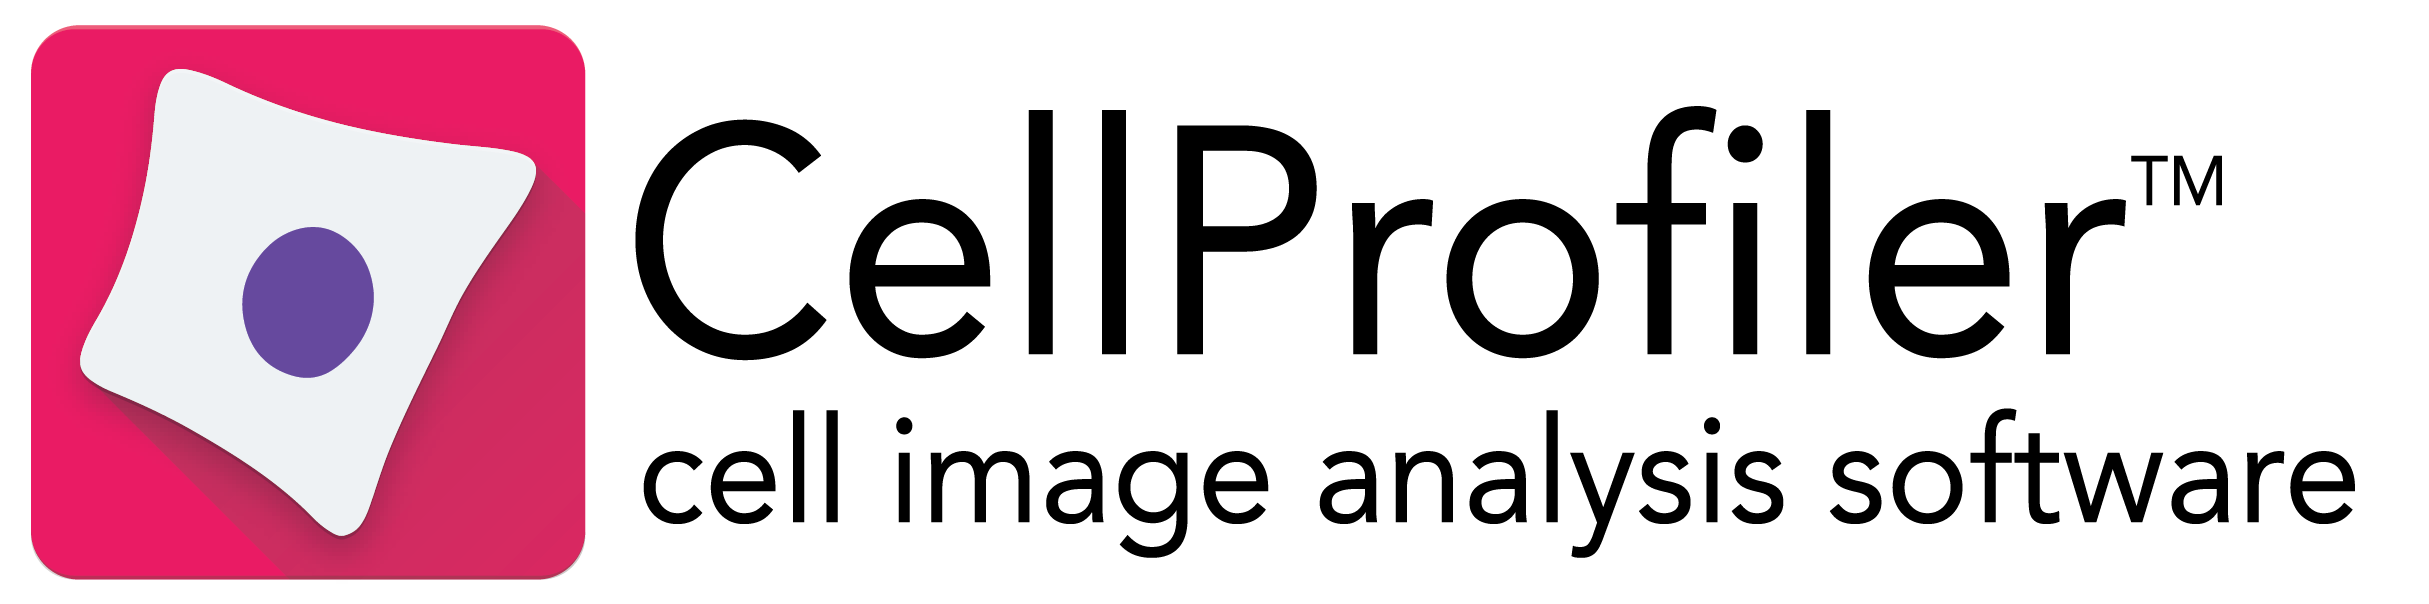 Cellprofiler-logo.png